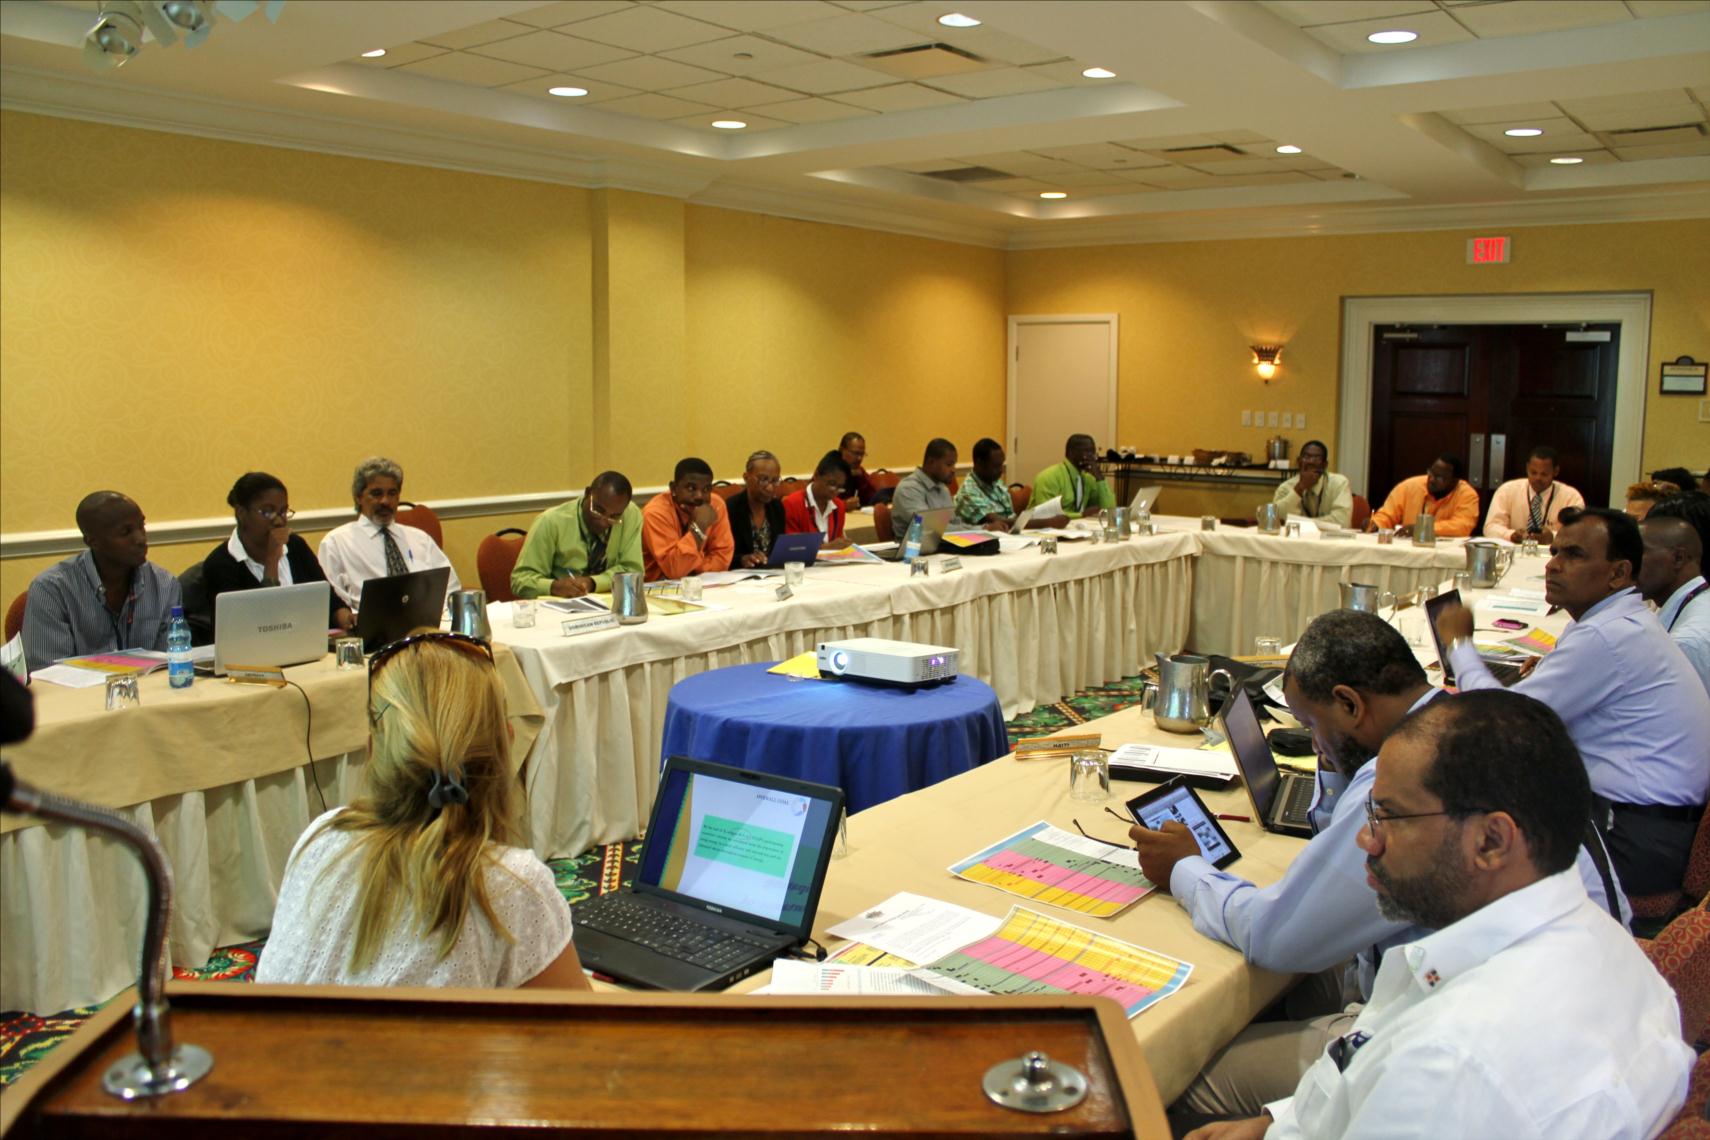 REGIONAL SUSTAINABLE ENERGY WORKSHOP FOR ENERGY AND EDUCATOR STAKEHOLDERS IN THE CARIBBEAN(September 19, 2012)